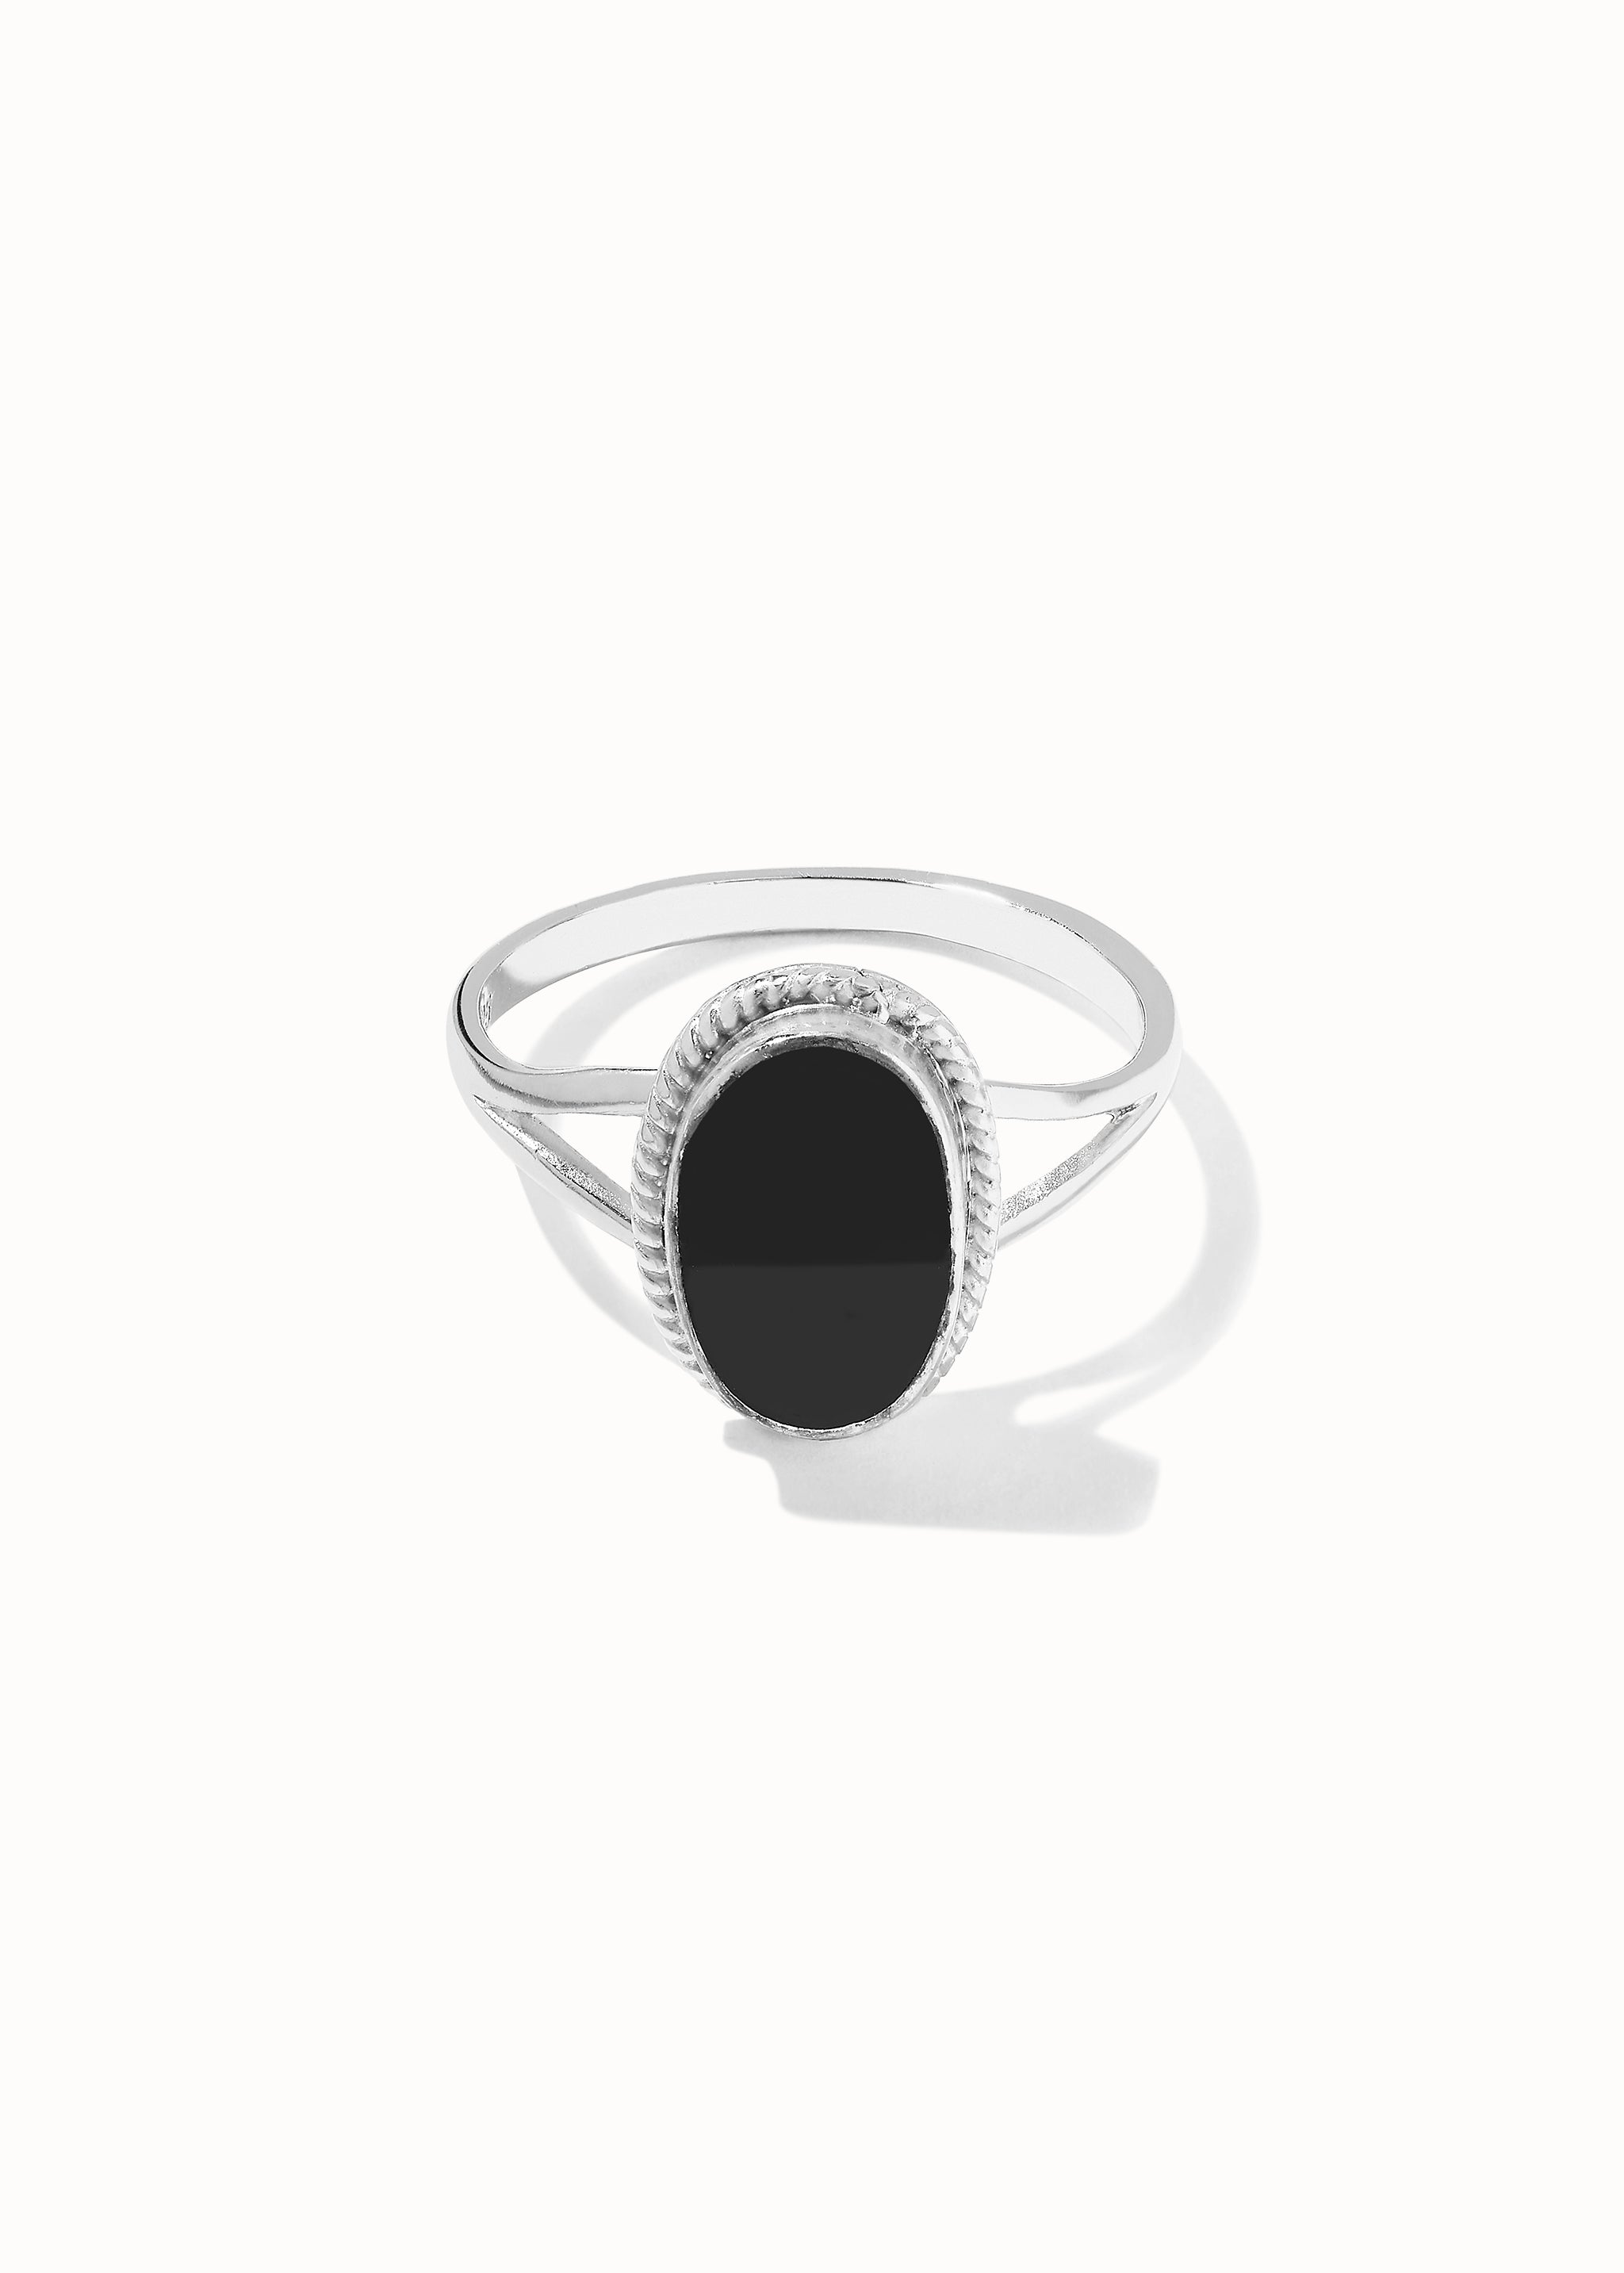 Oval Souvenir Ring Black